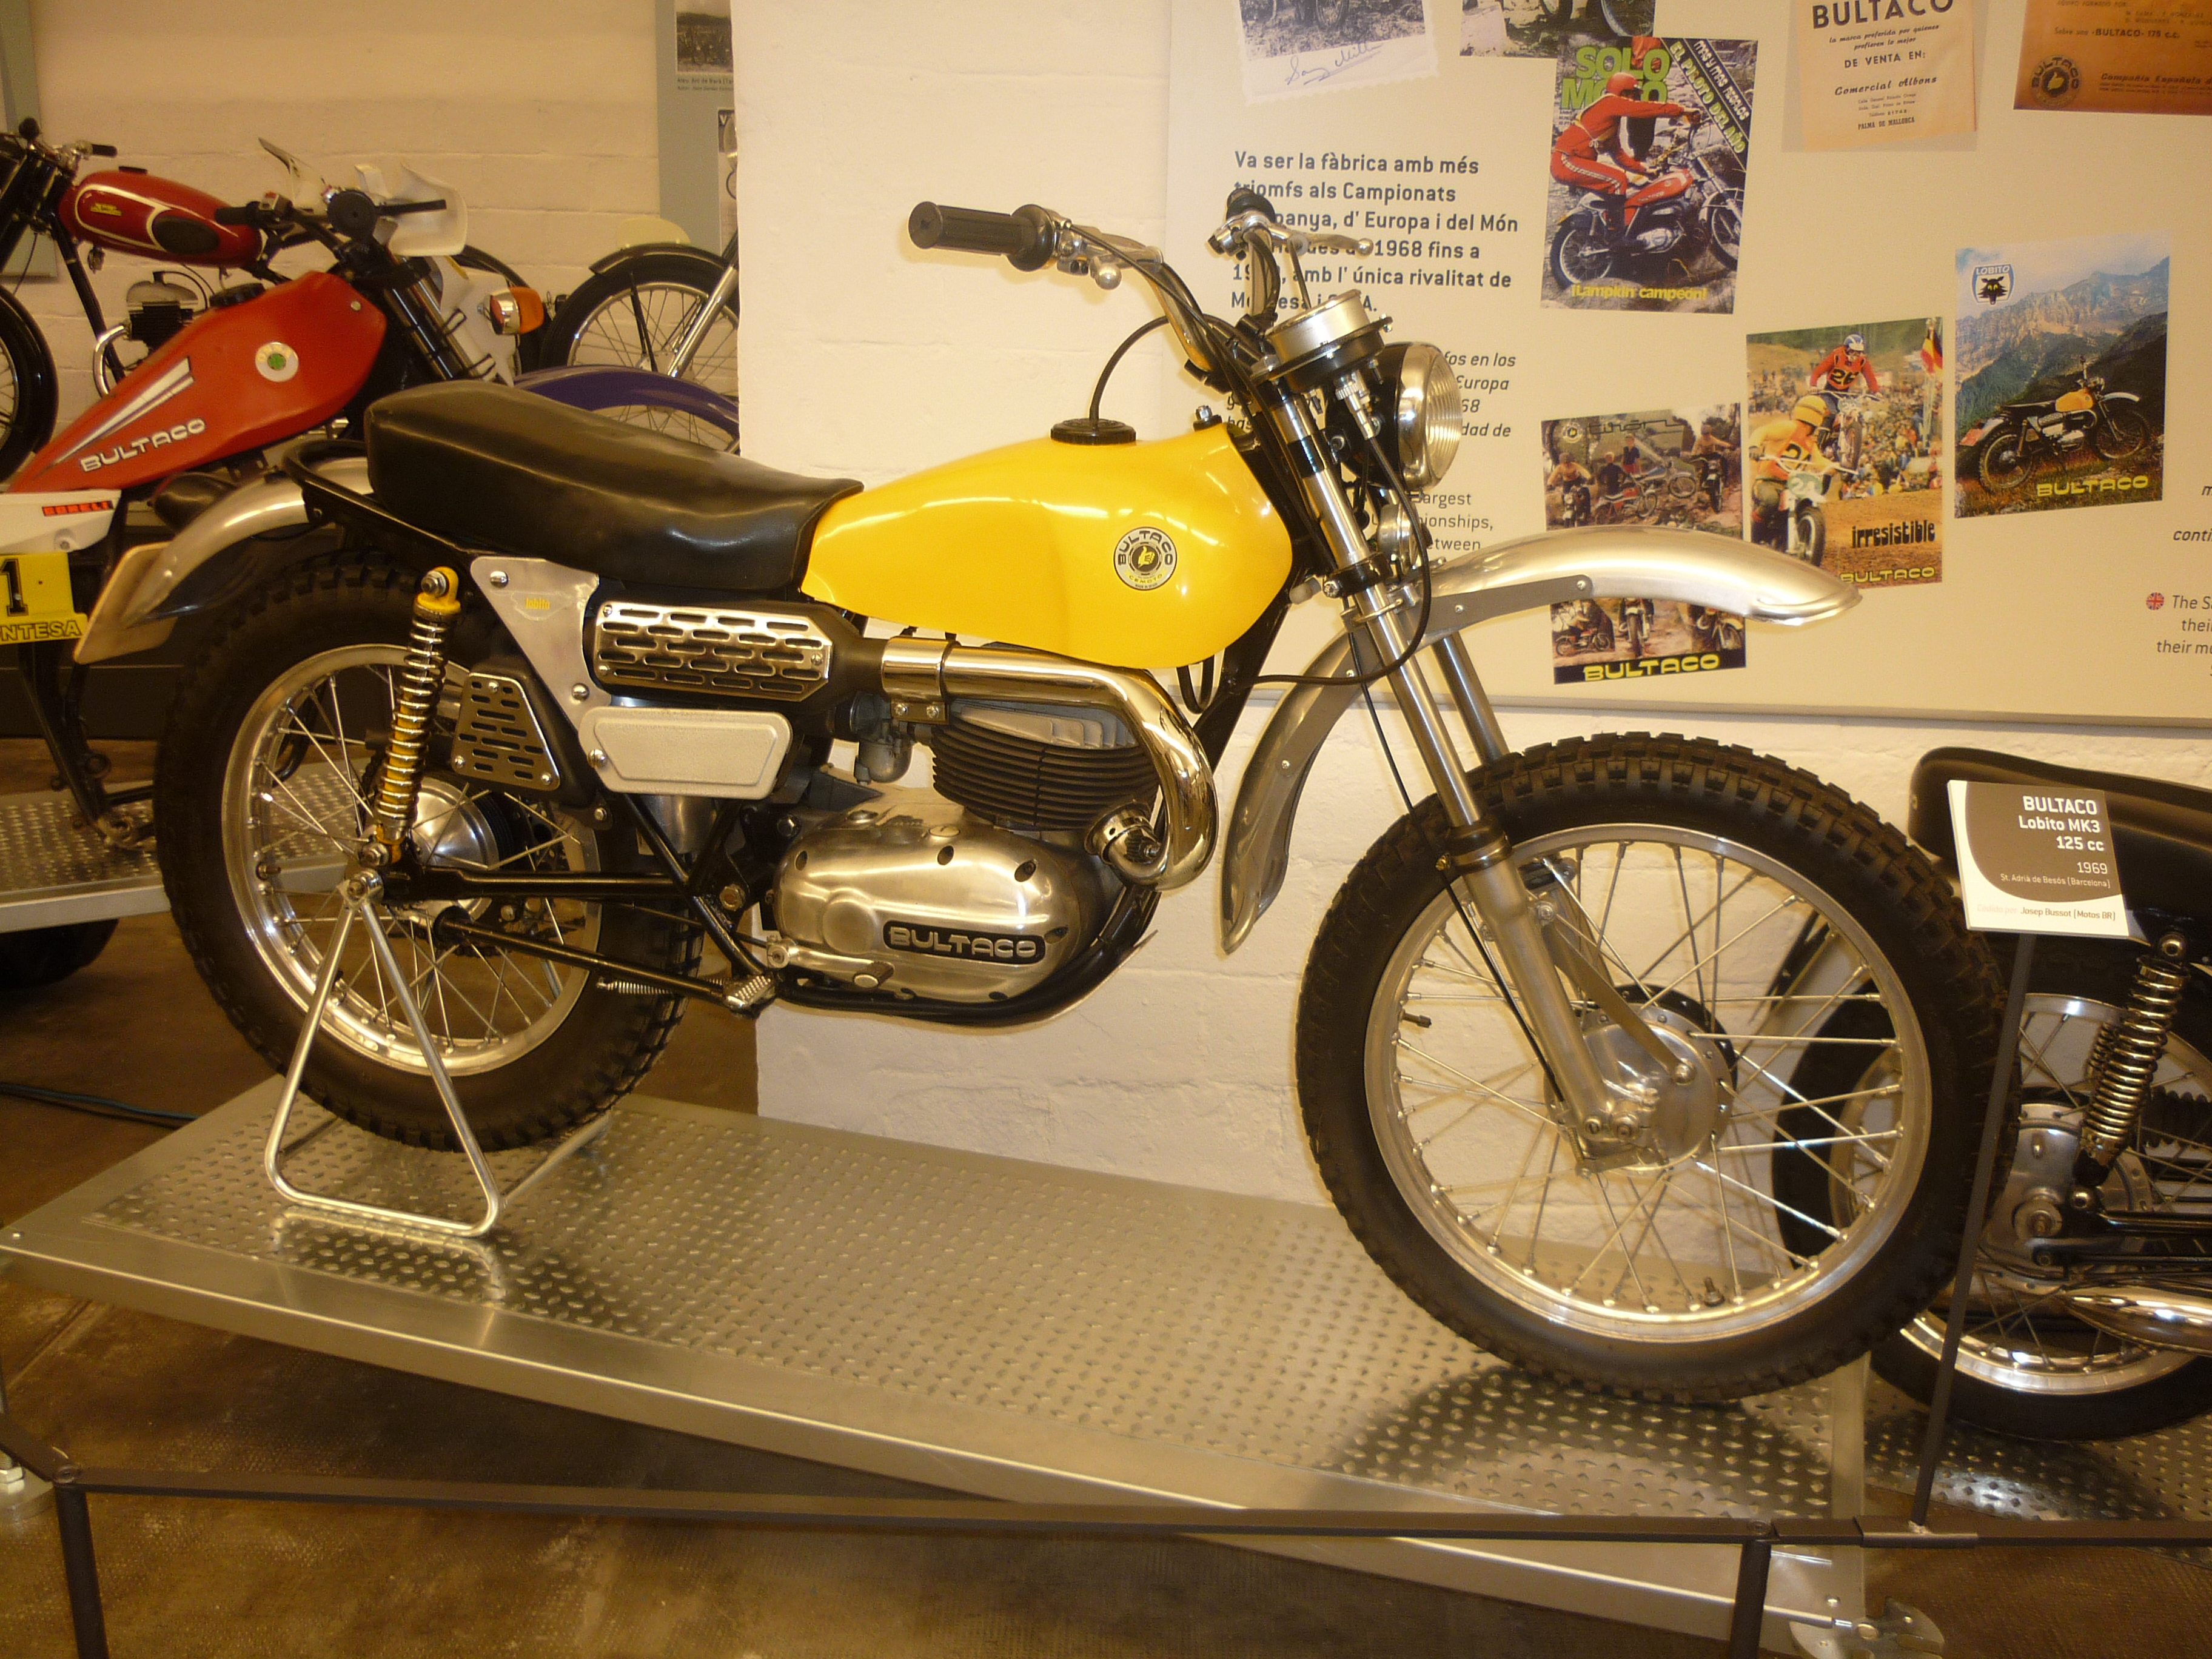 File:Bultaco Lobito MK3 125cc 1969.JPG - Wikimedia Commons